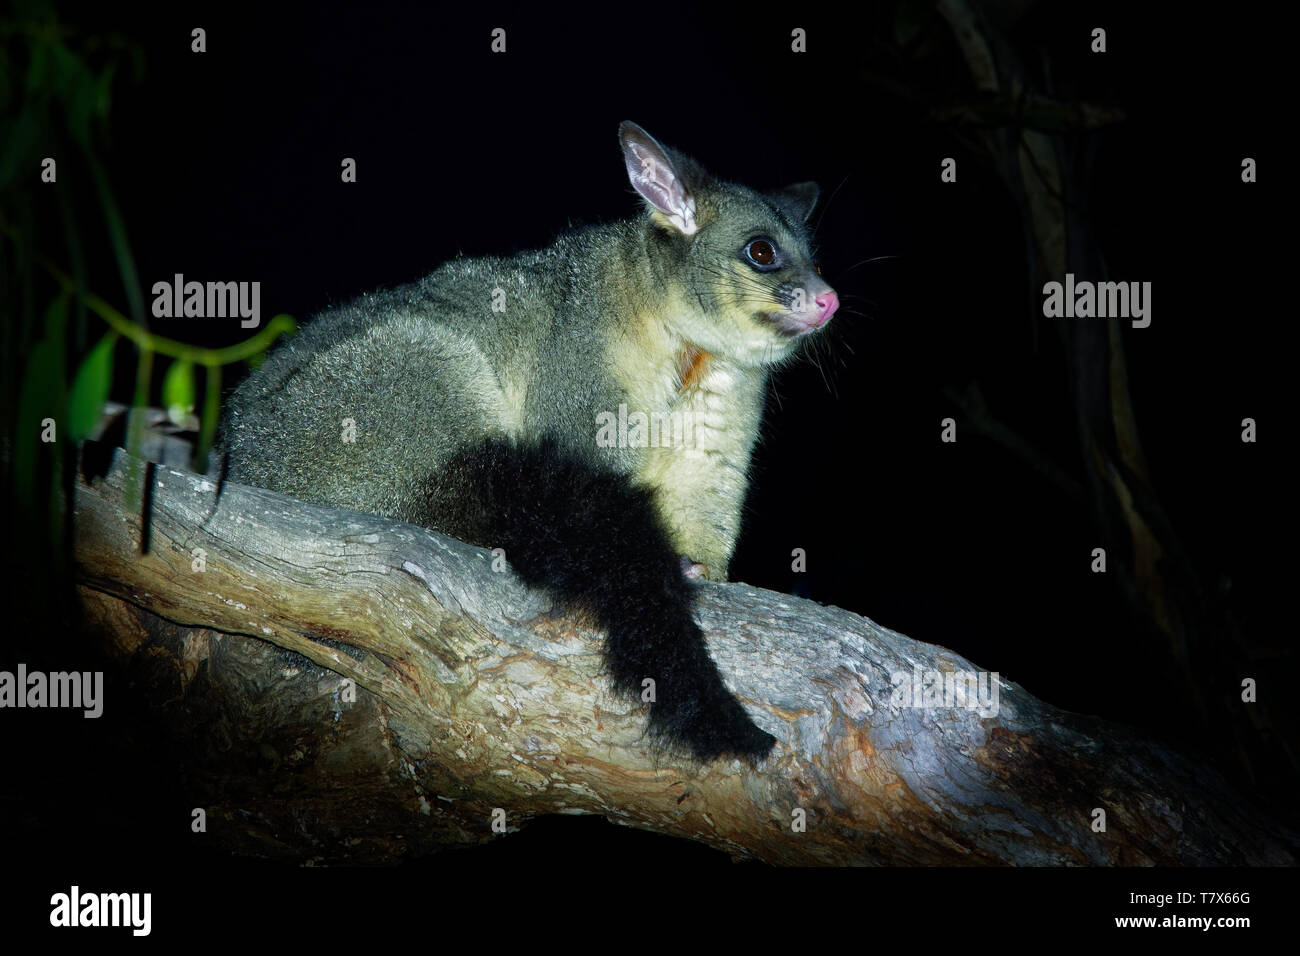 Common Brush-tailed Possum - Trichosurus vulpecula -nocturnal, semi-arboreal marsupial of Australia, introduced to New Zealand. Stock Photo